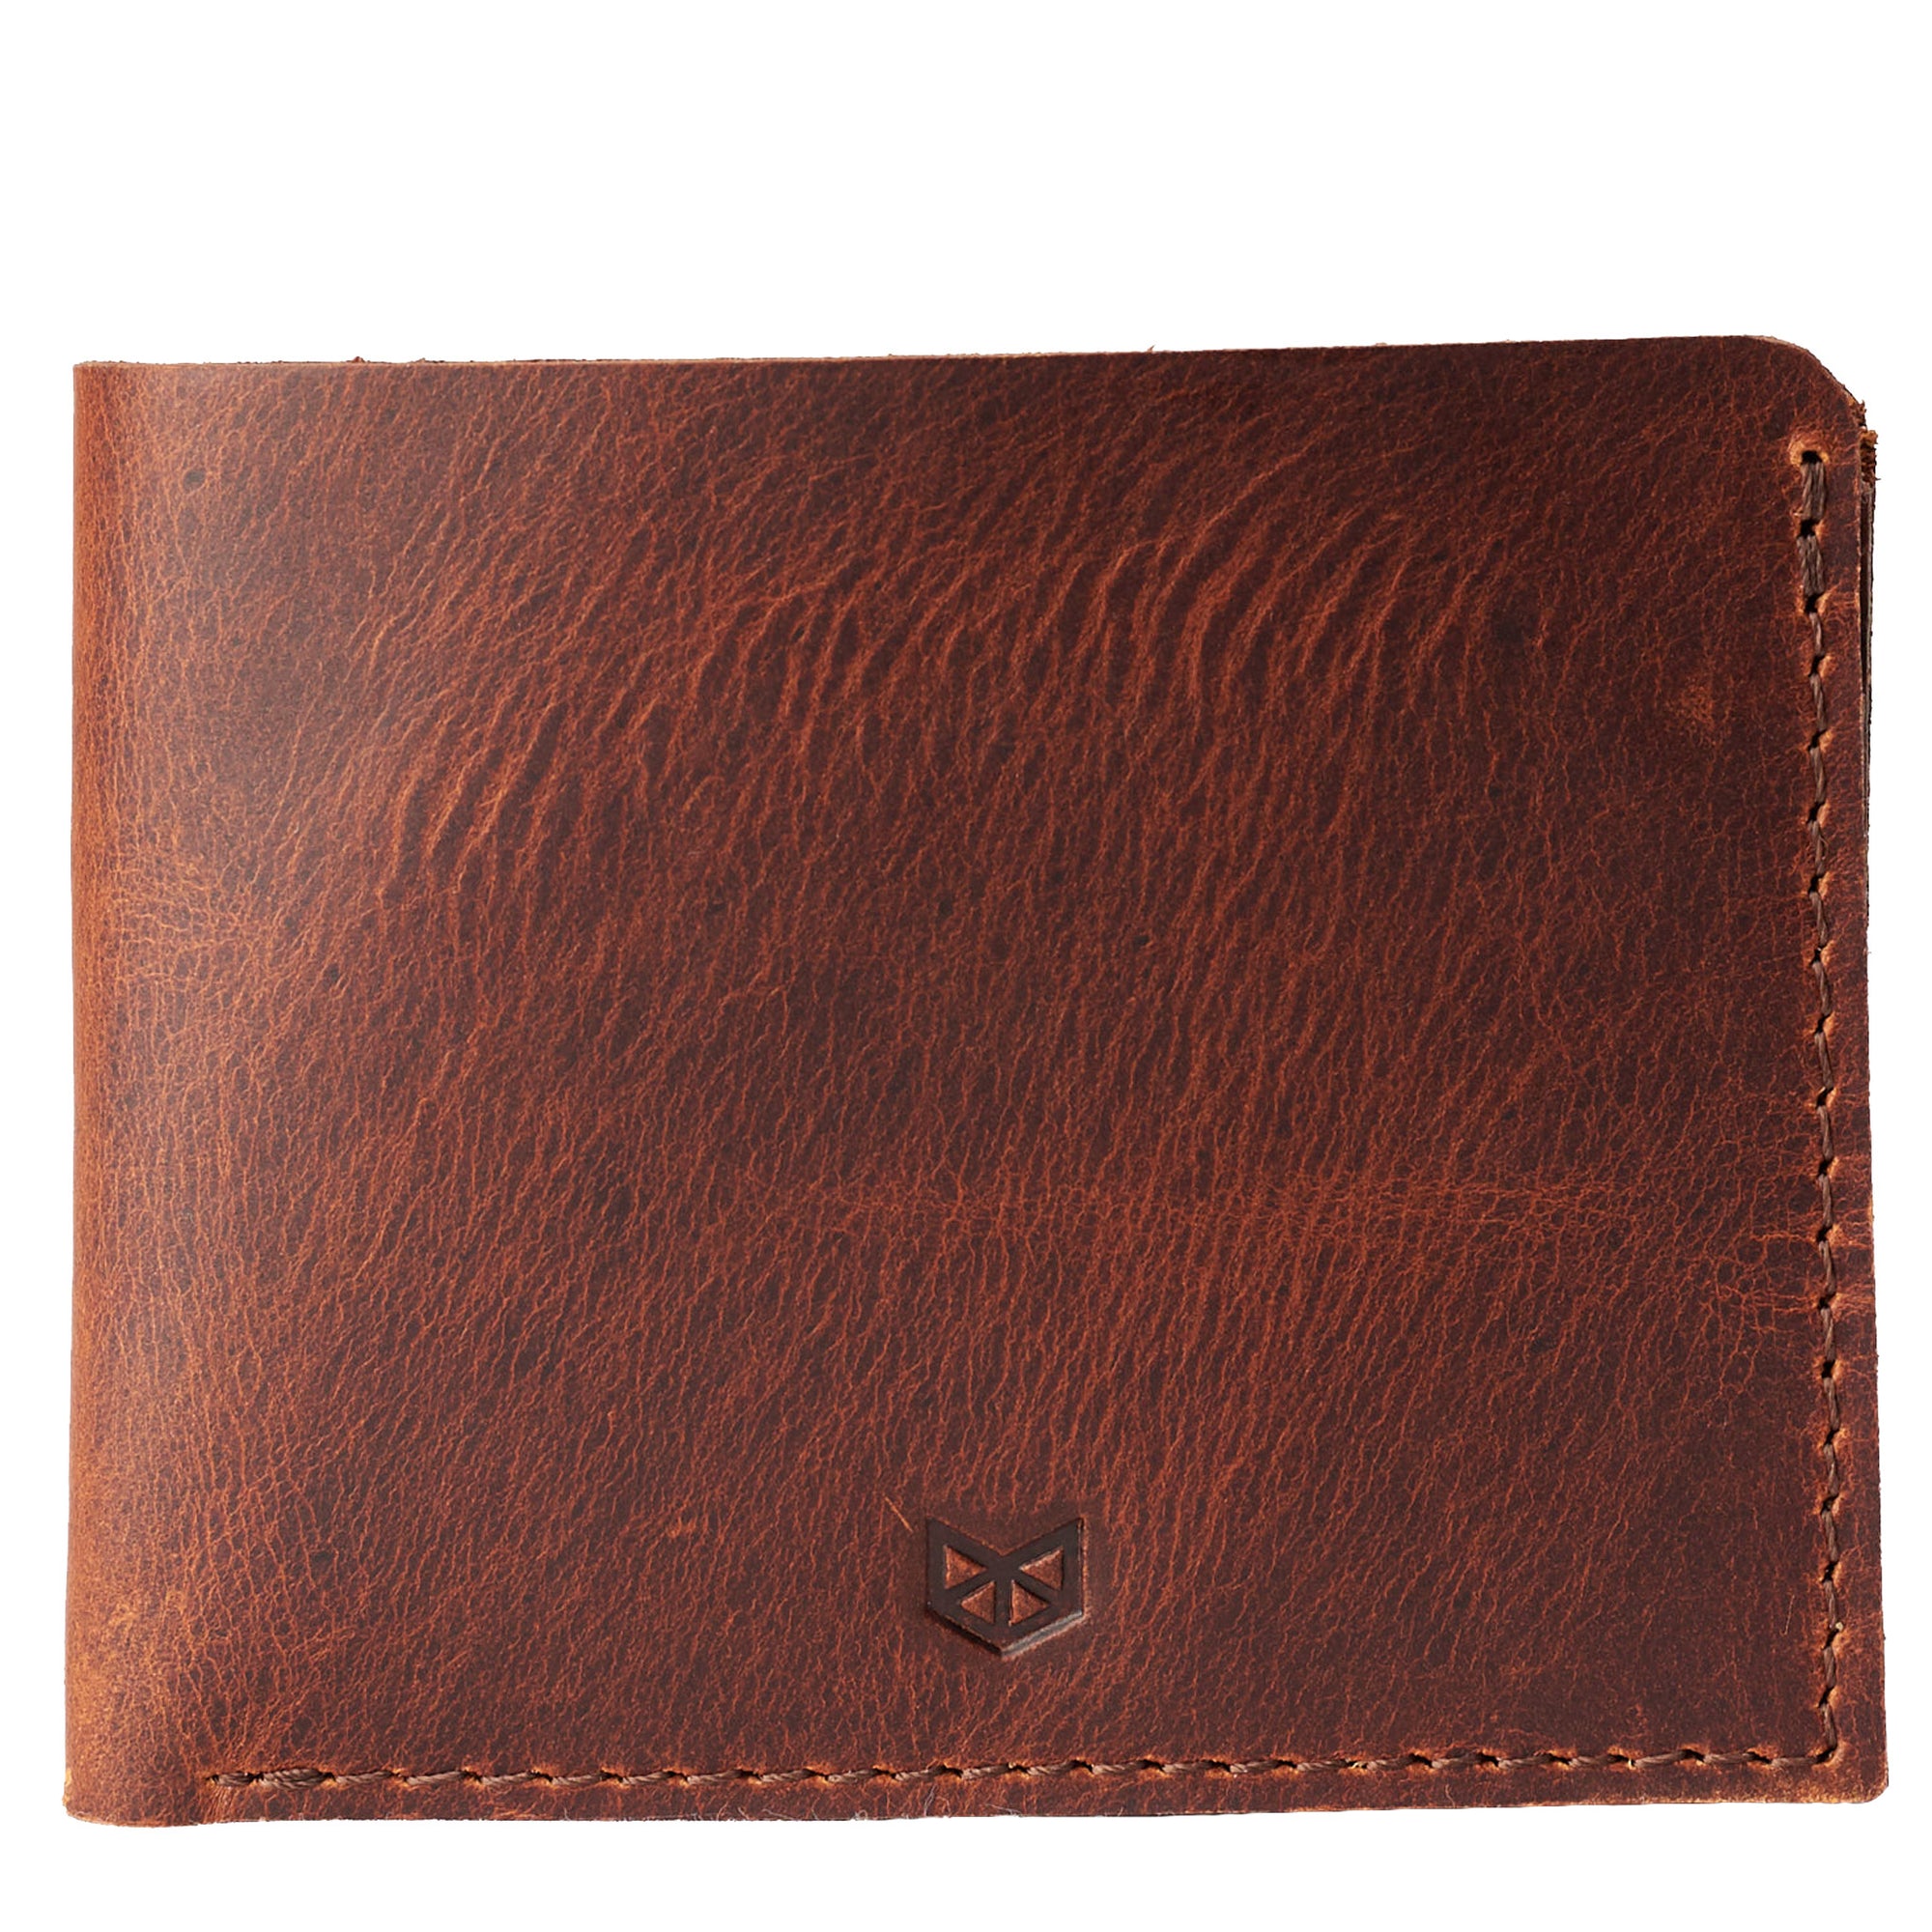 Wallet kit. Leather sandstone slim wallet gifts for men handmade accessories. minimalist full grain leather thin wallet. Made by Capra Leather. 